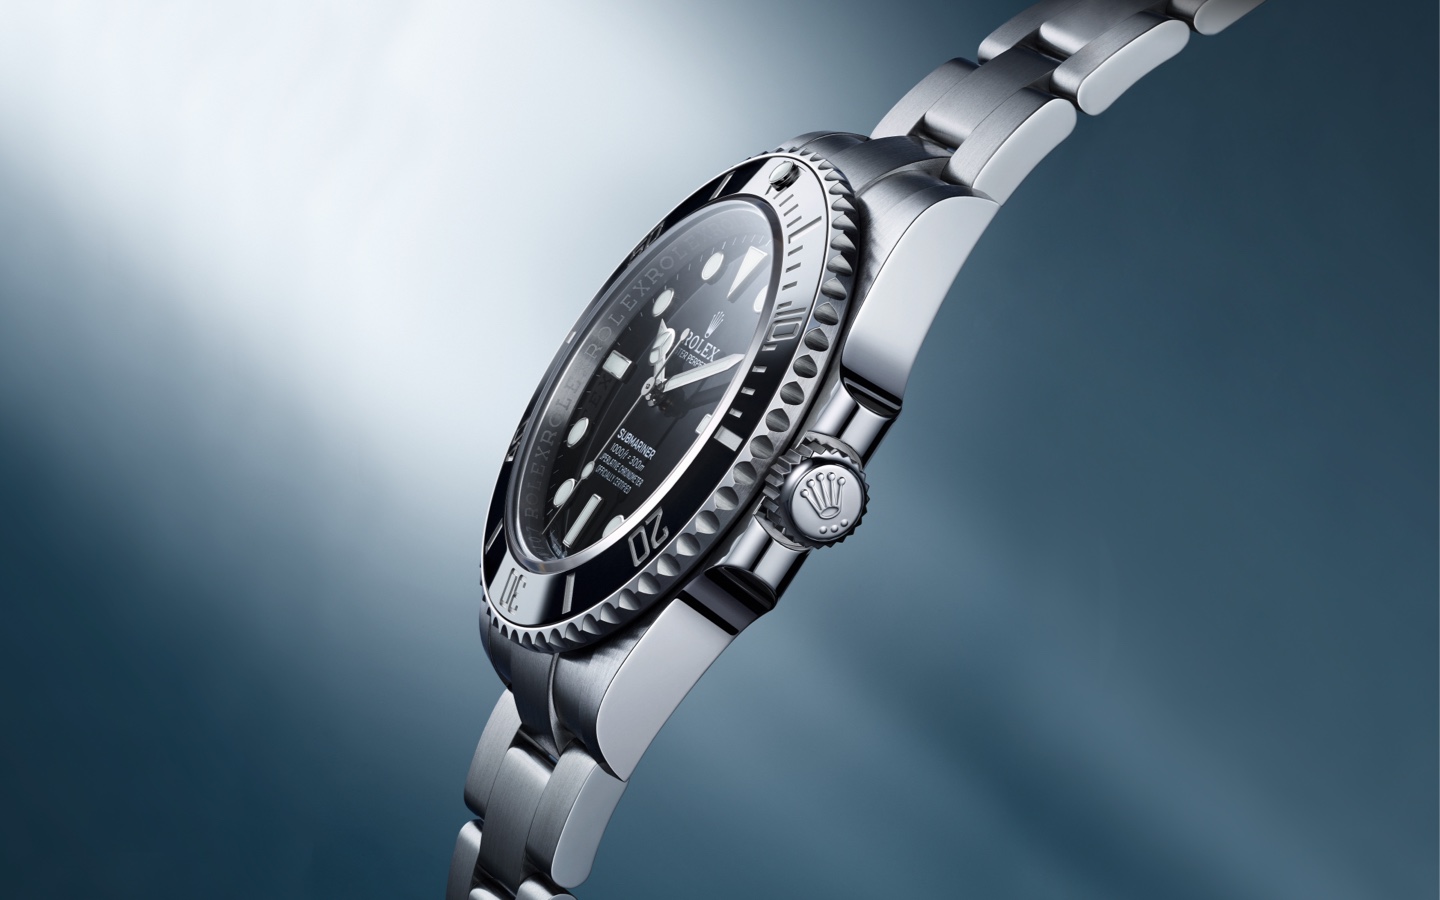 A true divers’ watch by design